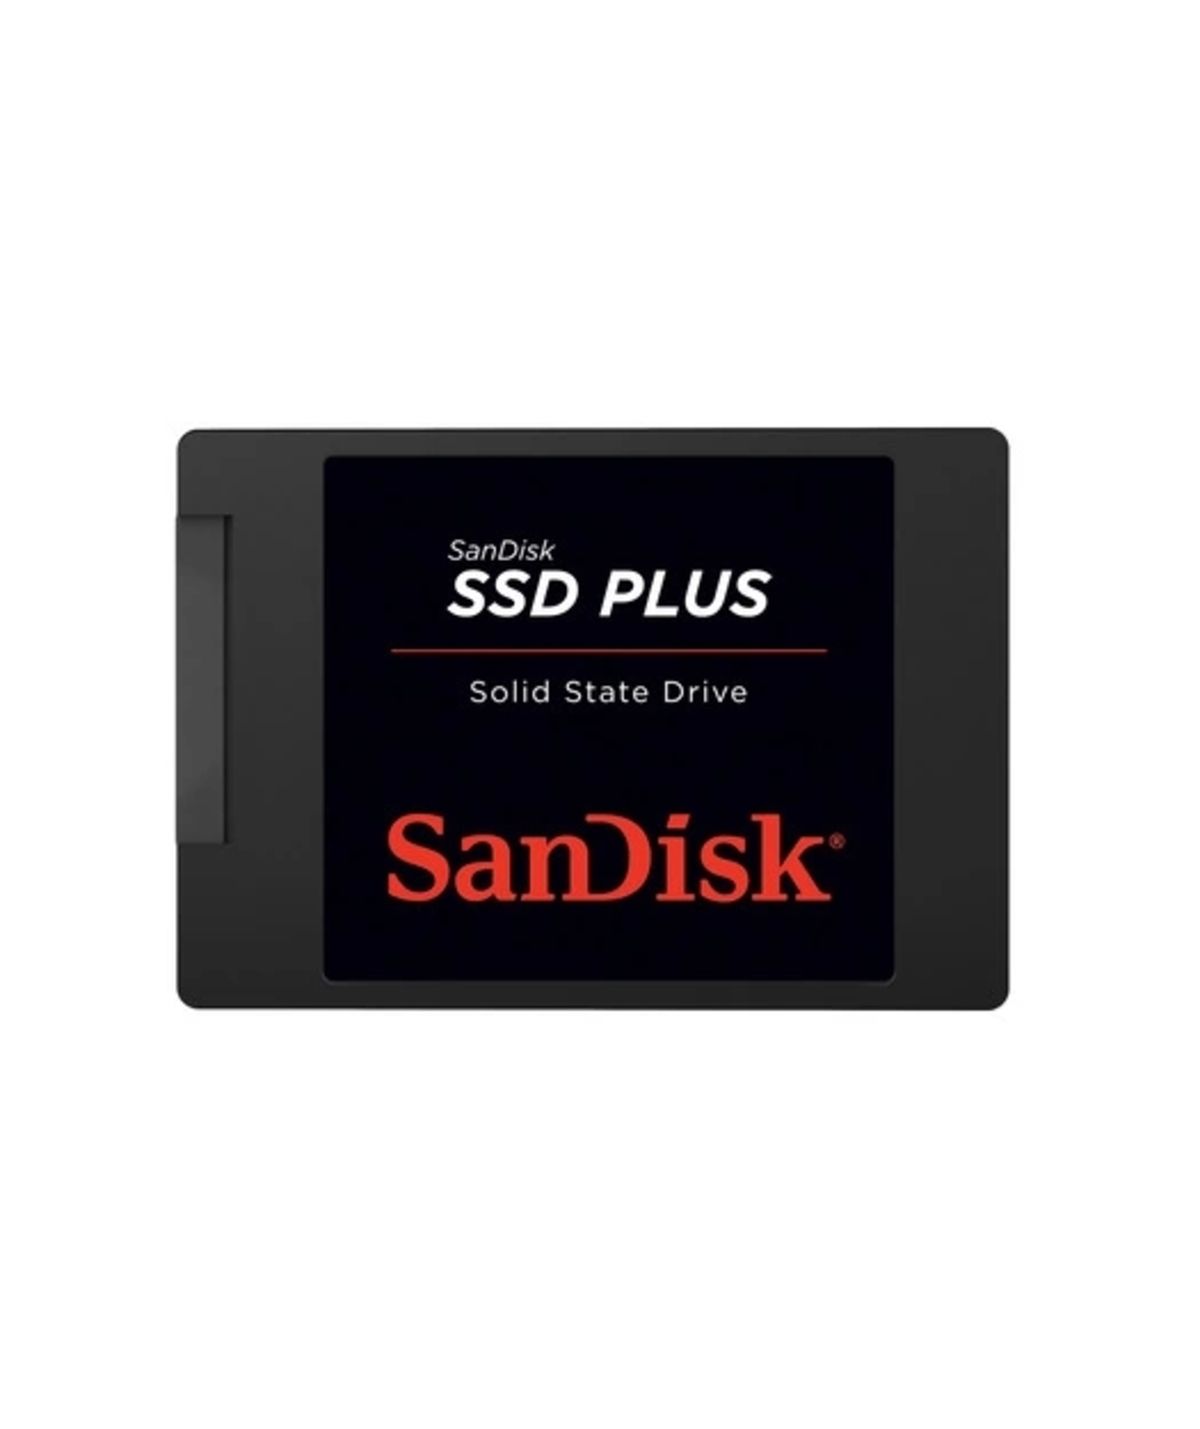 Sandisk Ssd Plus 480gb 535mb-445mb/s Sata 3 2.5 Inc Ssd Sdssda-480g-g26